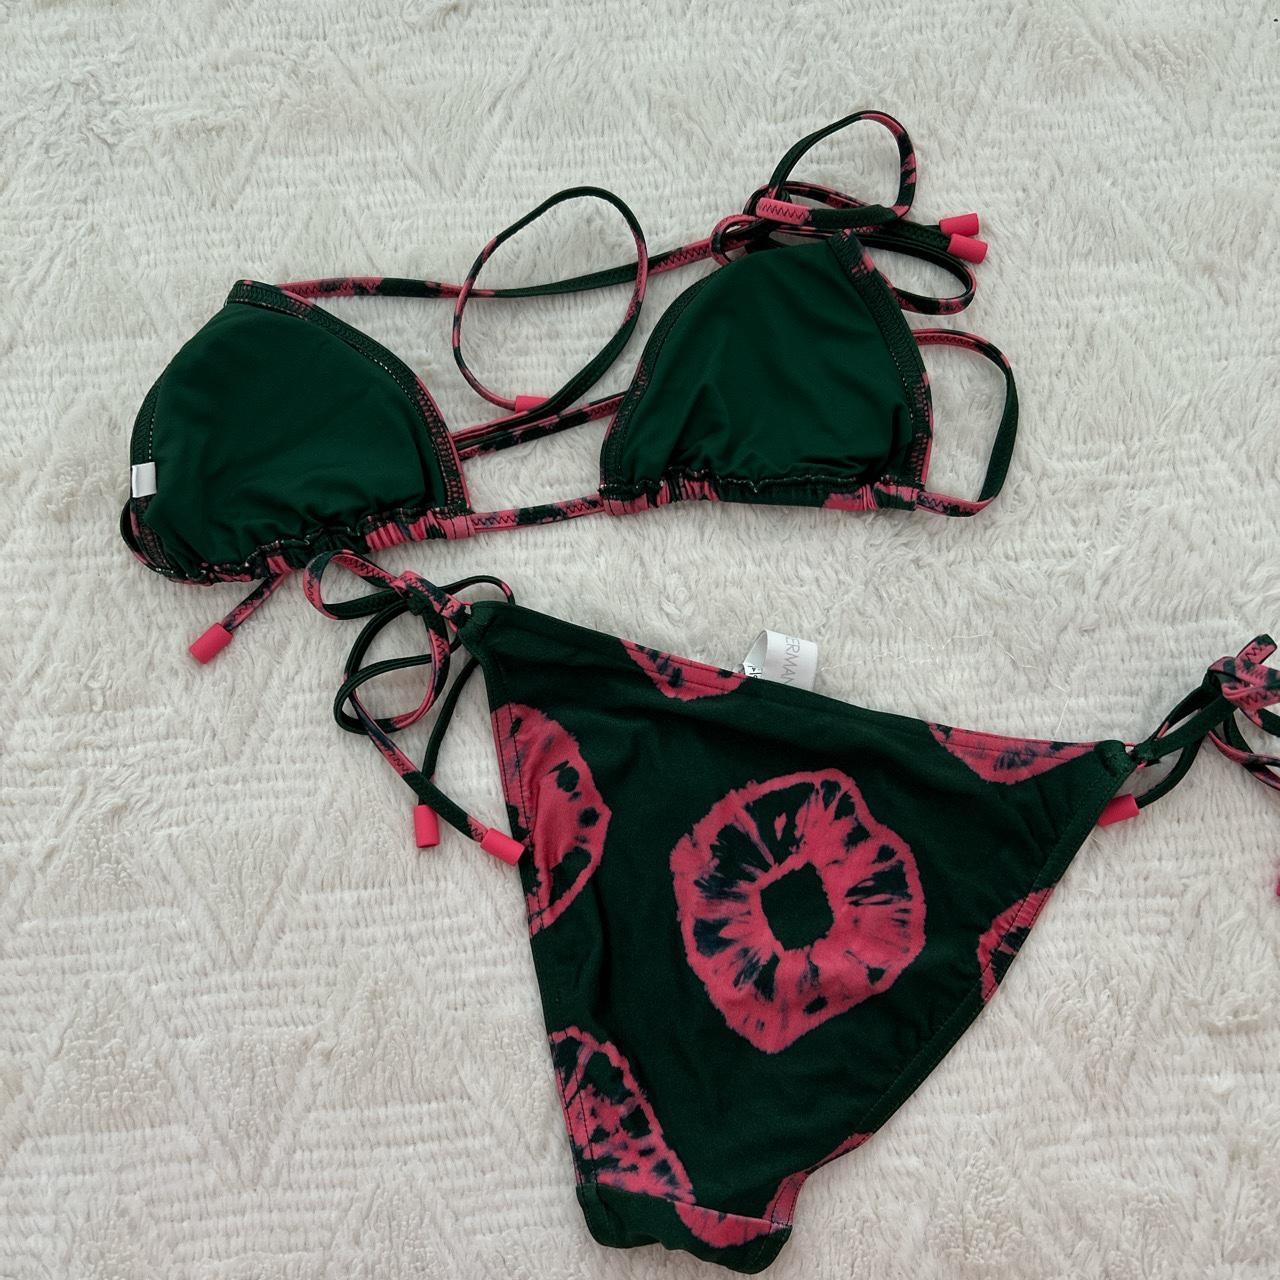 Zimmermann Women's Green and Pink Bikinis-and-tankini-sets (3)